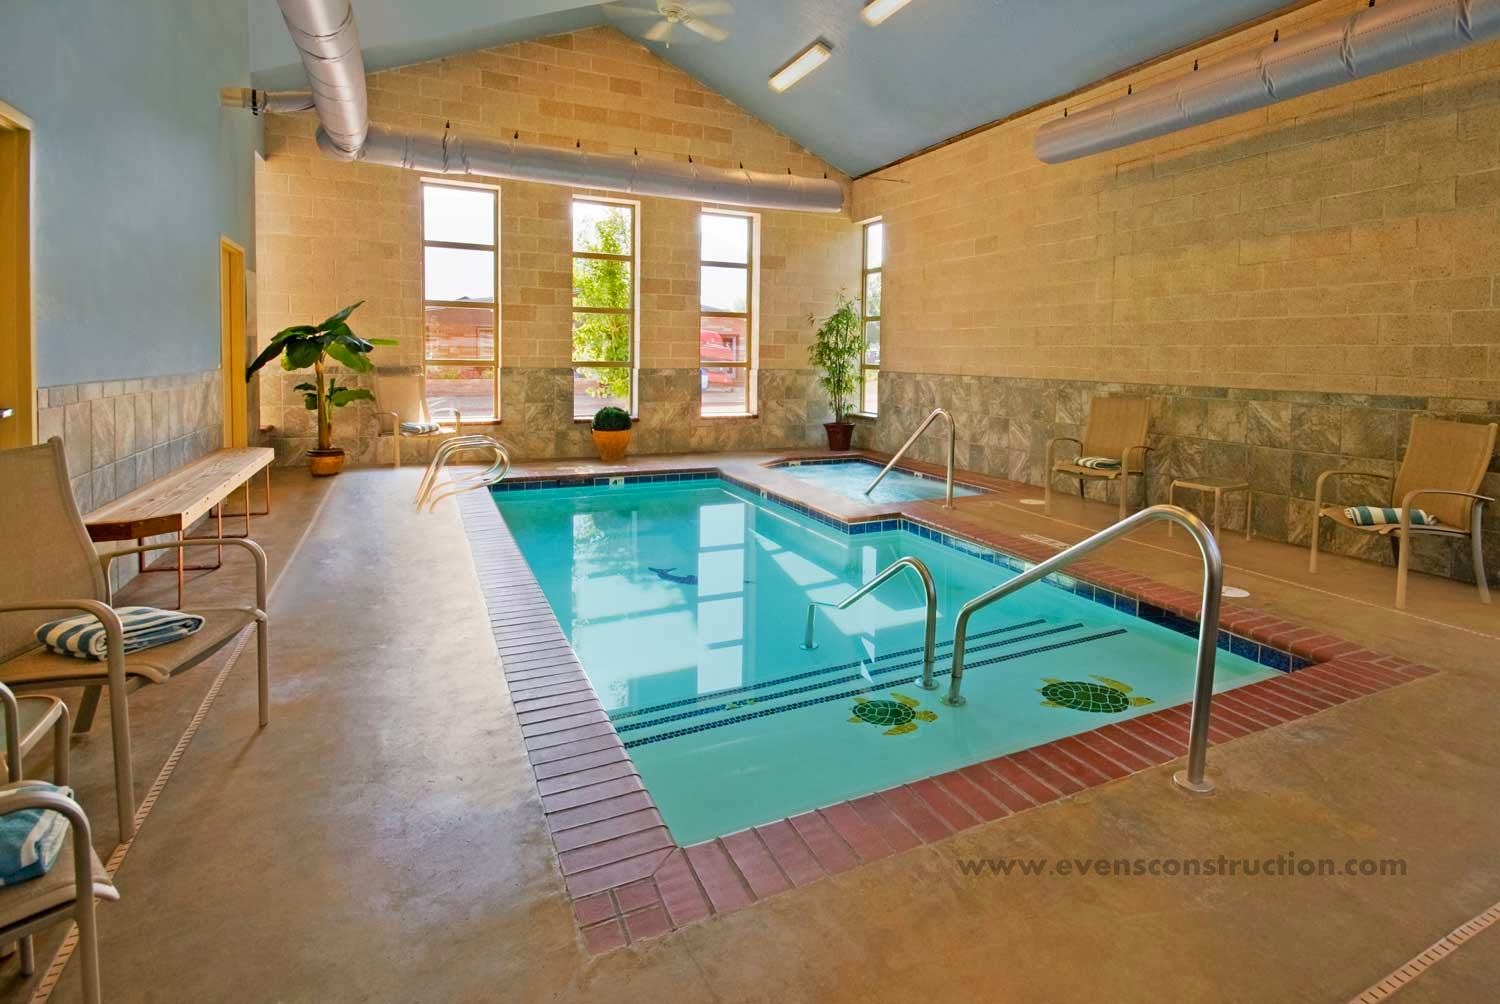 Evens Construction Pvt Ltd: Compact Indoor Swimming Pools